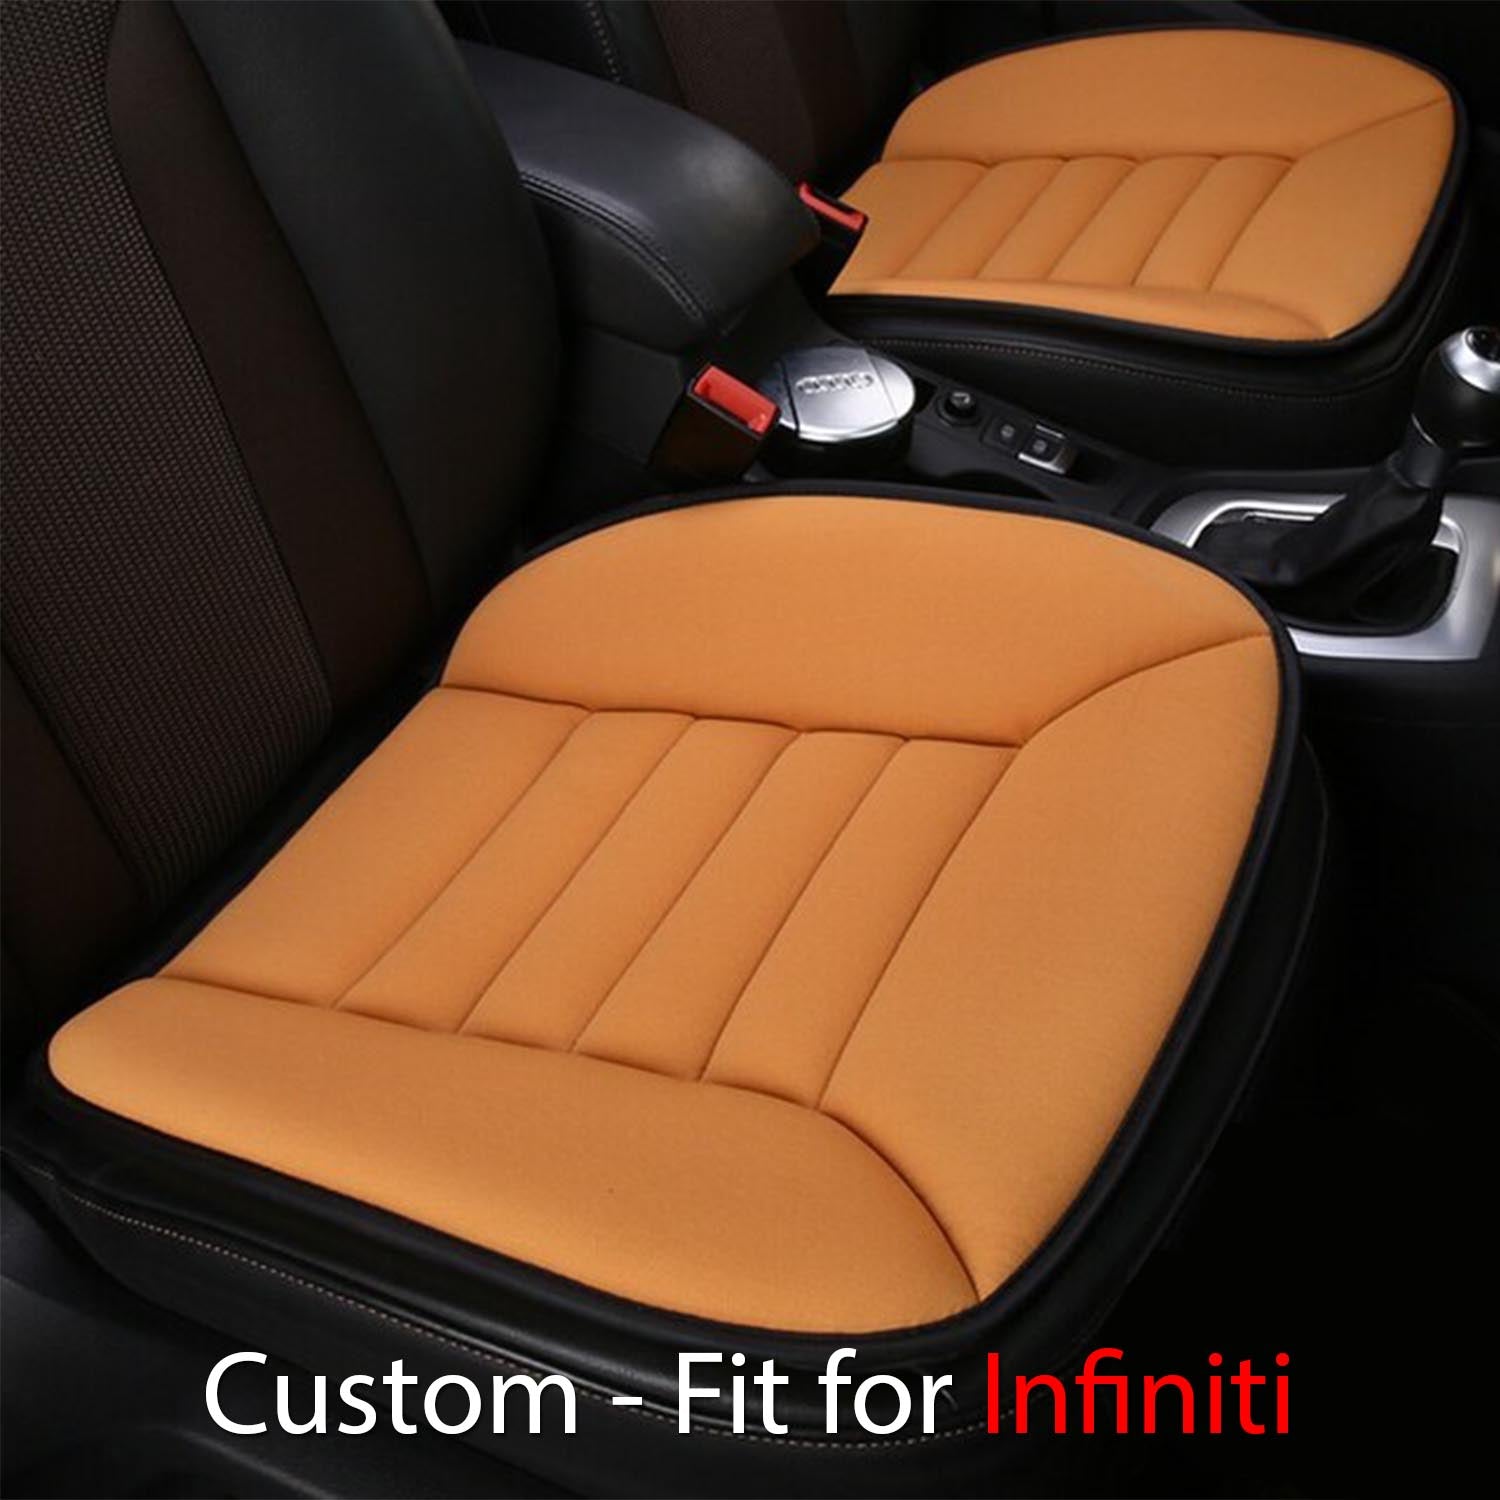 Car Seat Cushion with 1.2inch Comfort Memory Foam, Custom-Fit For Car, Seat Cushion for Car and Office Chair DLIN247